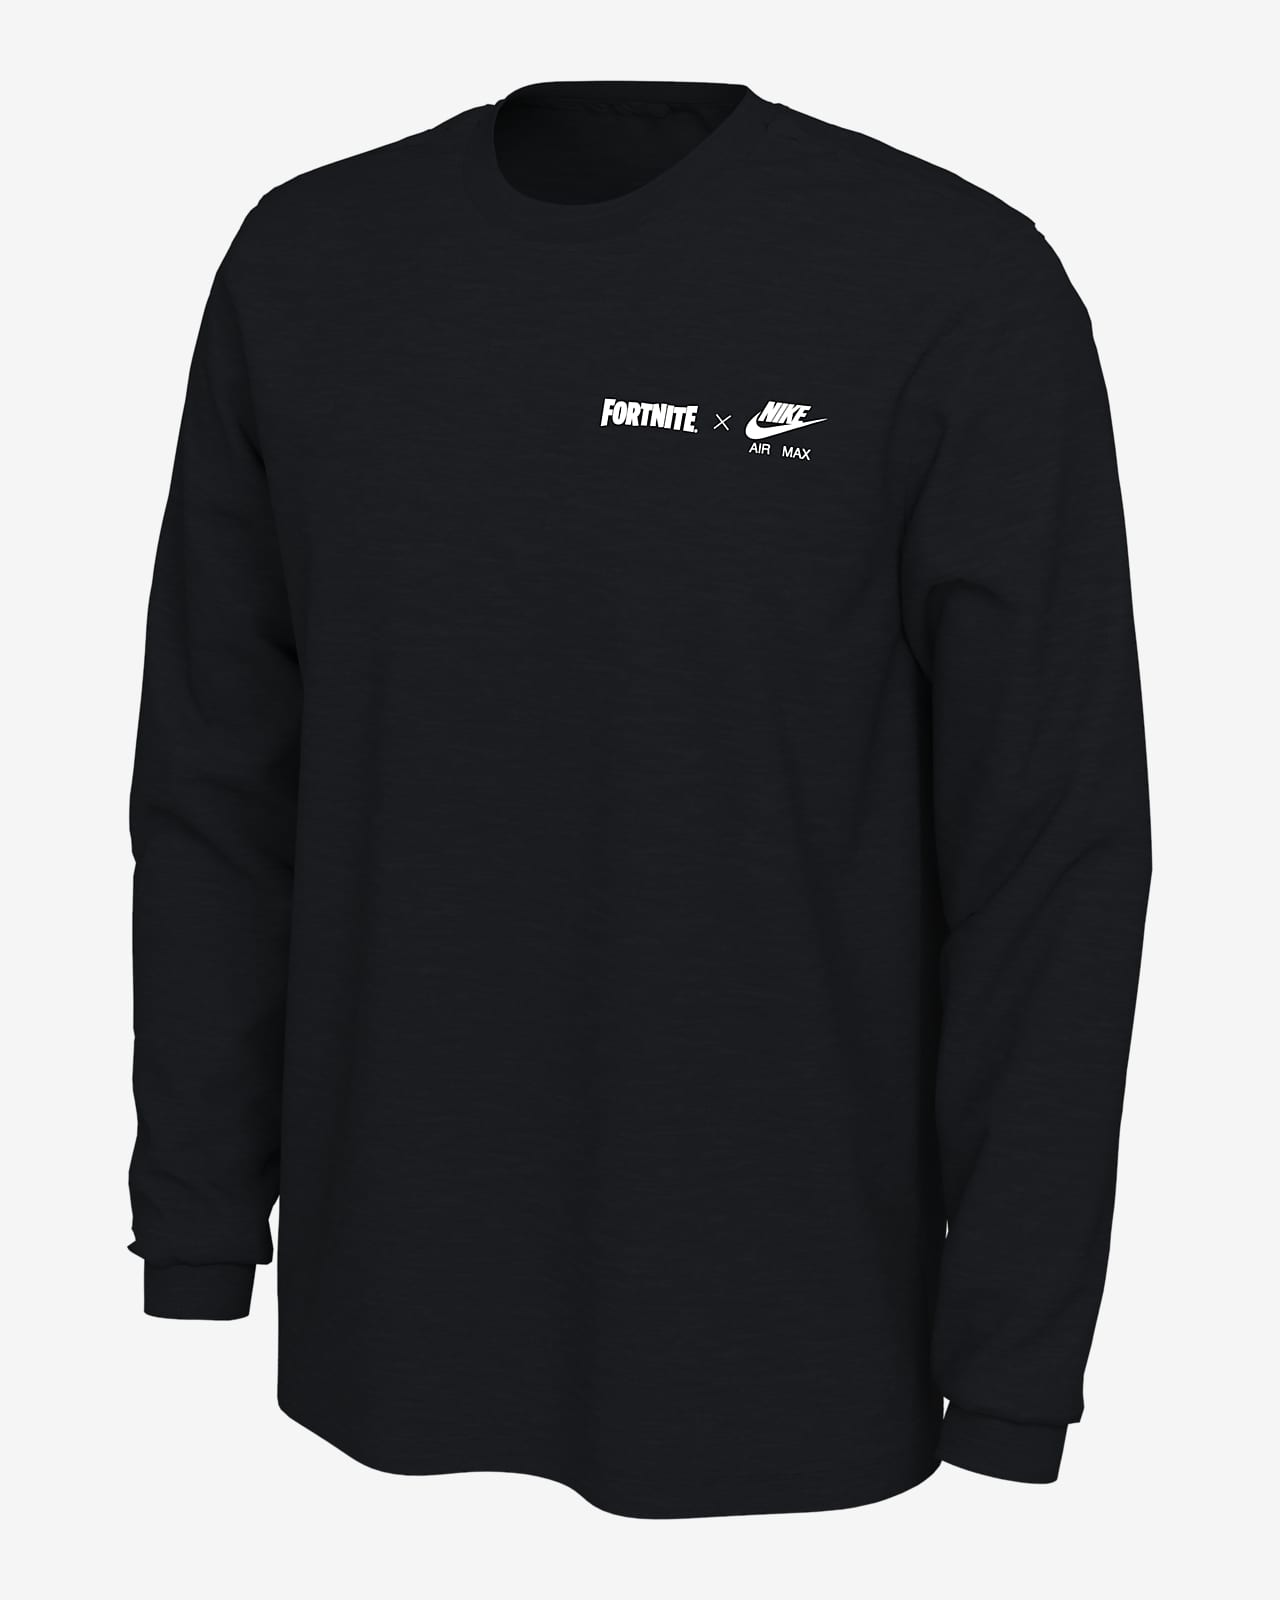 Fortnite™ x Nike Air Max Men's Nike Long-Sleeve T-Shirt.